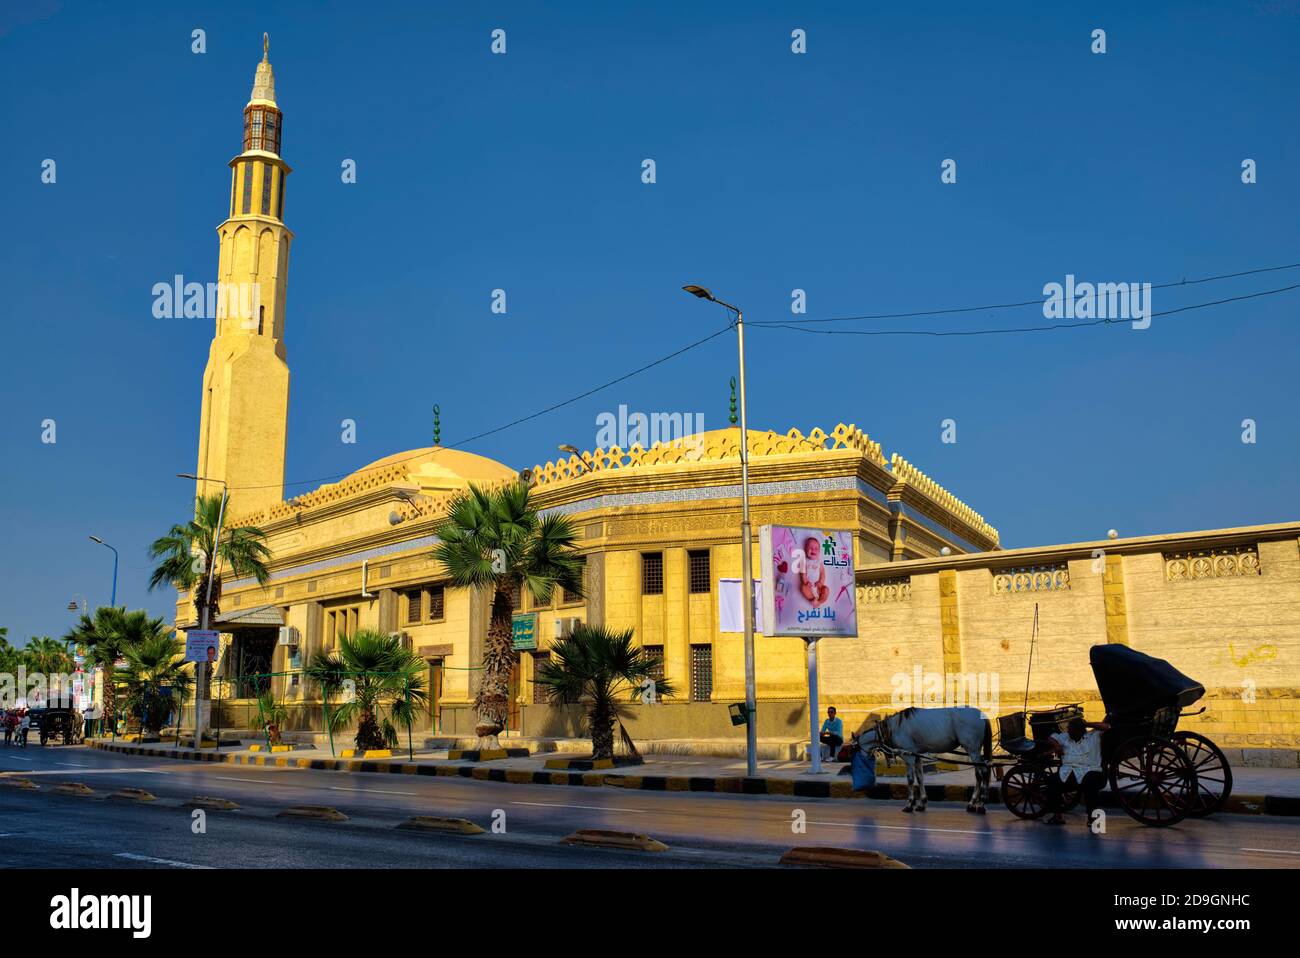 Manar El Islam Mosque located on Corniche embankment next to the Fish market and Qaitbay citadel, on December 17 in Alexandria.  Taken @Alexandria, Eg Stock Photo